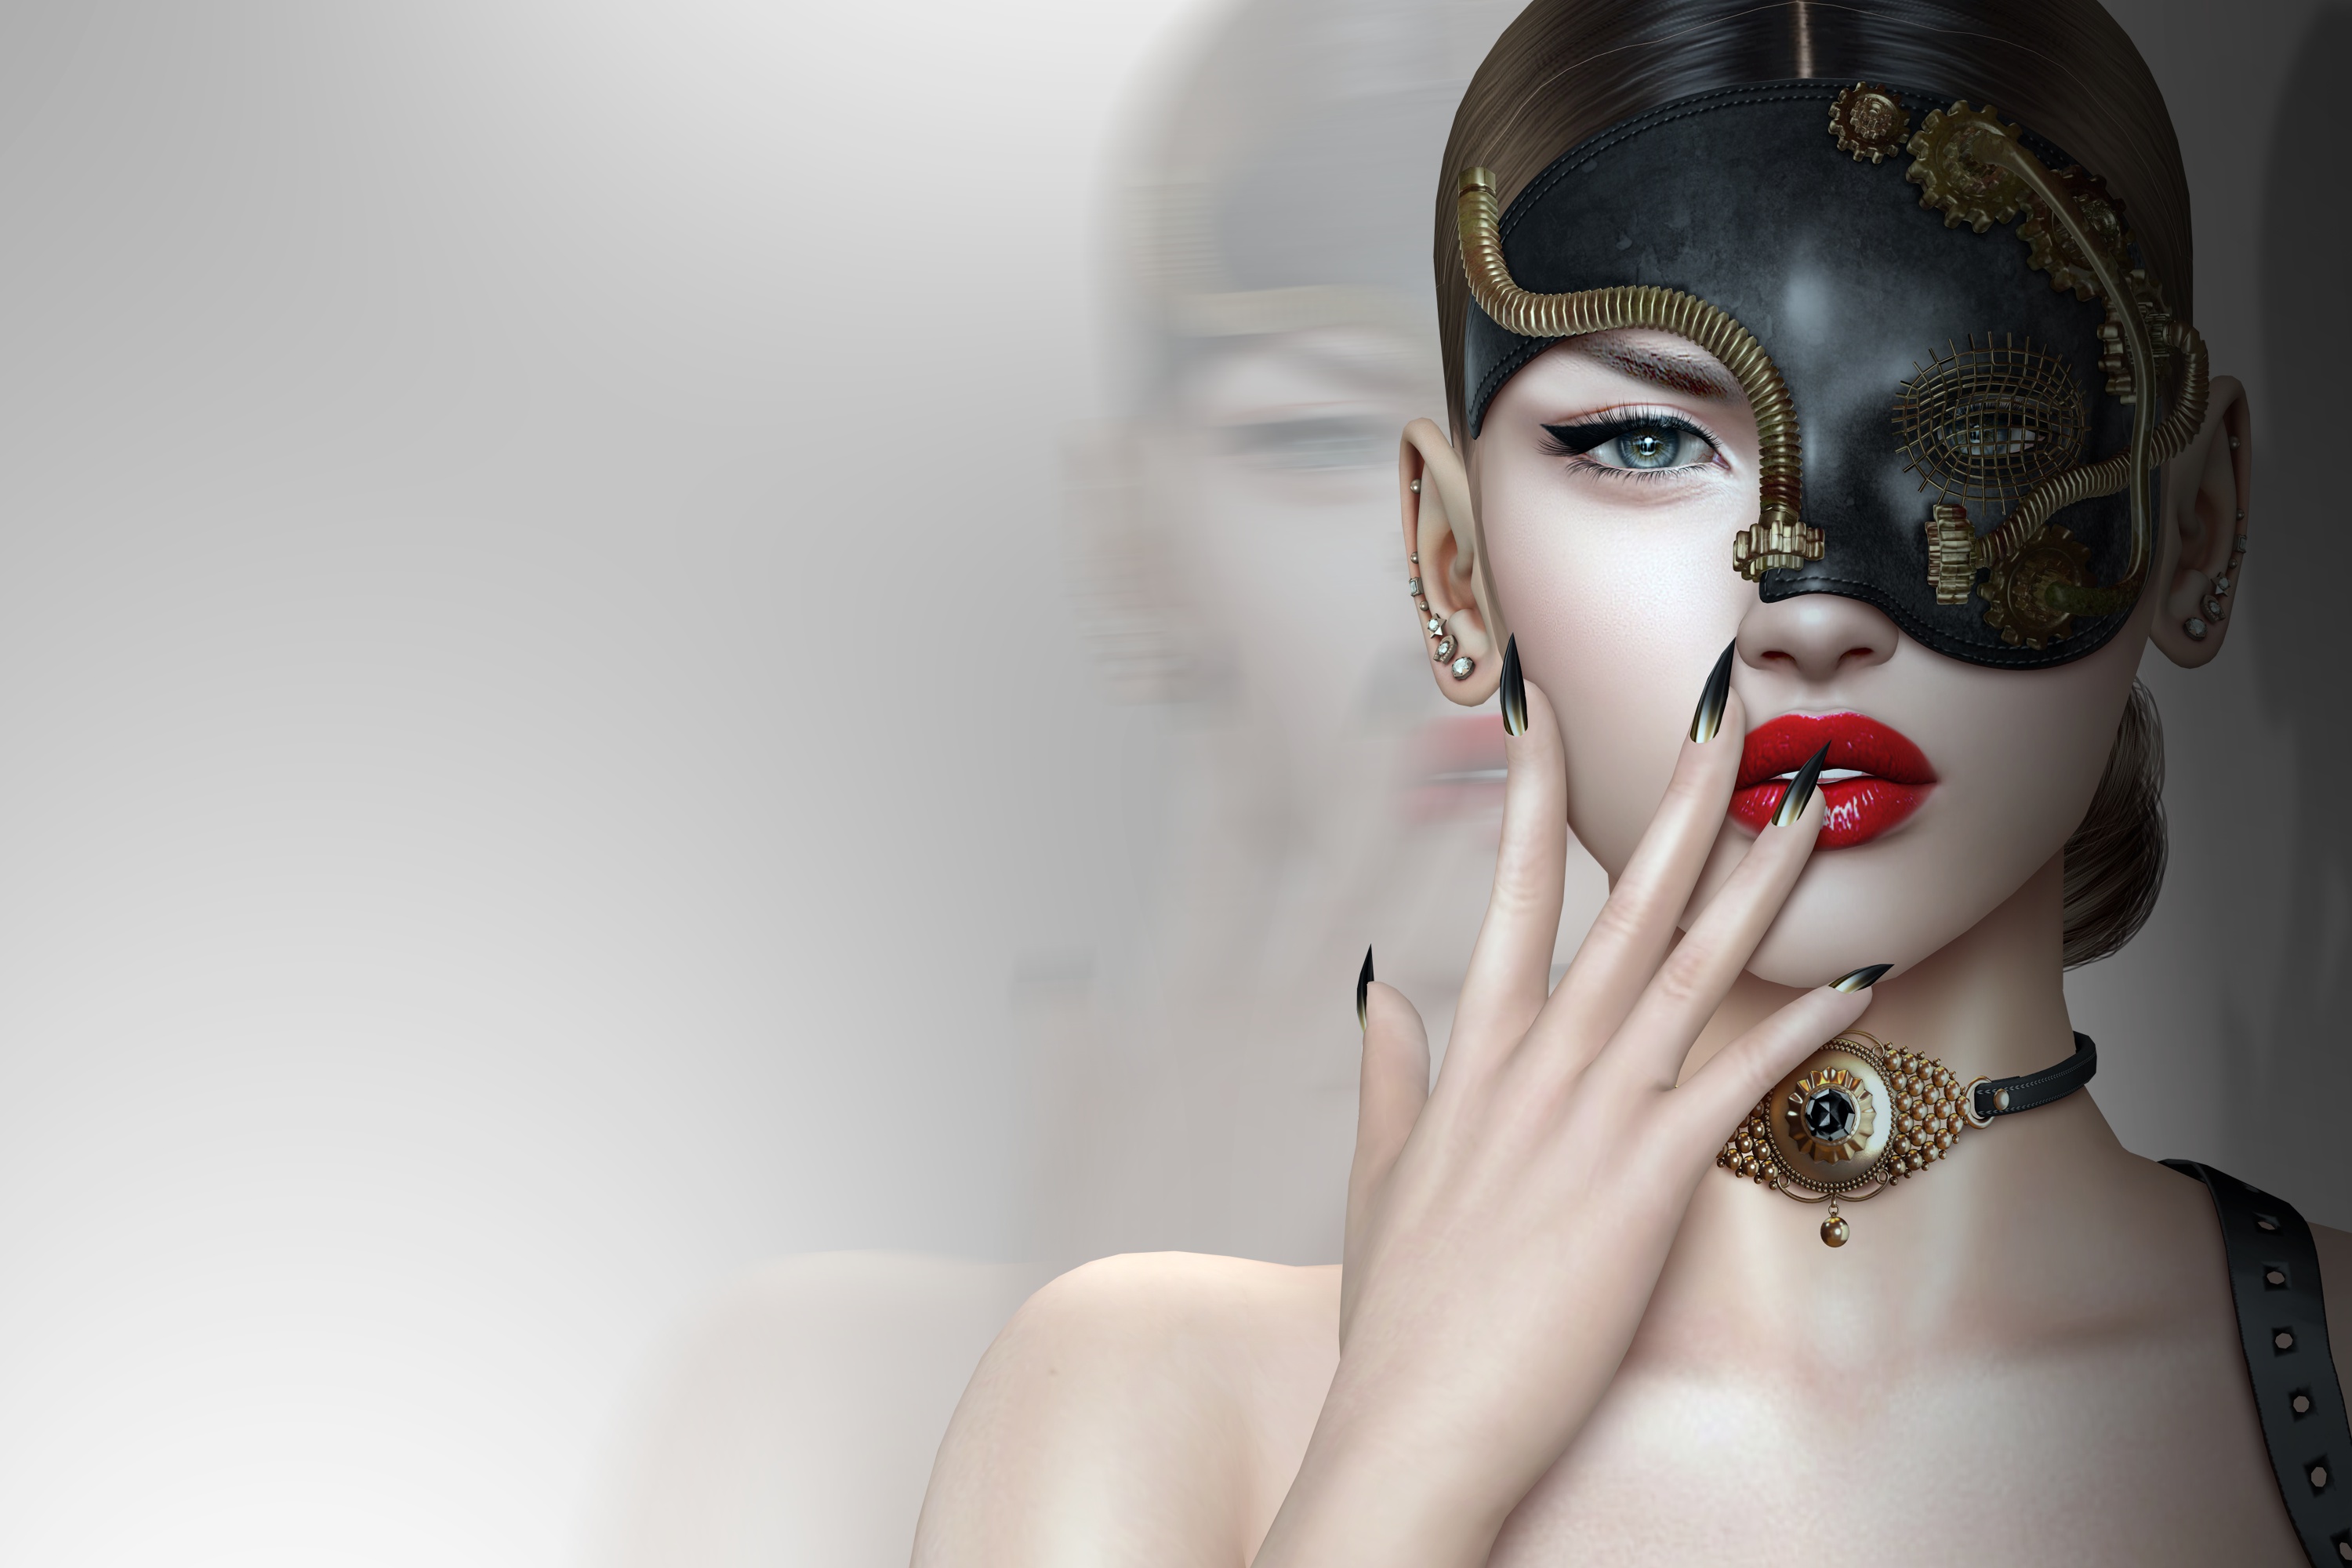 General 3000x2000 women mask face blue eyes mouth lipstick red lipstick black nails bare shoulders finger on lips CGI digital art artwork simple background collar